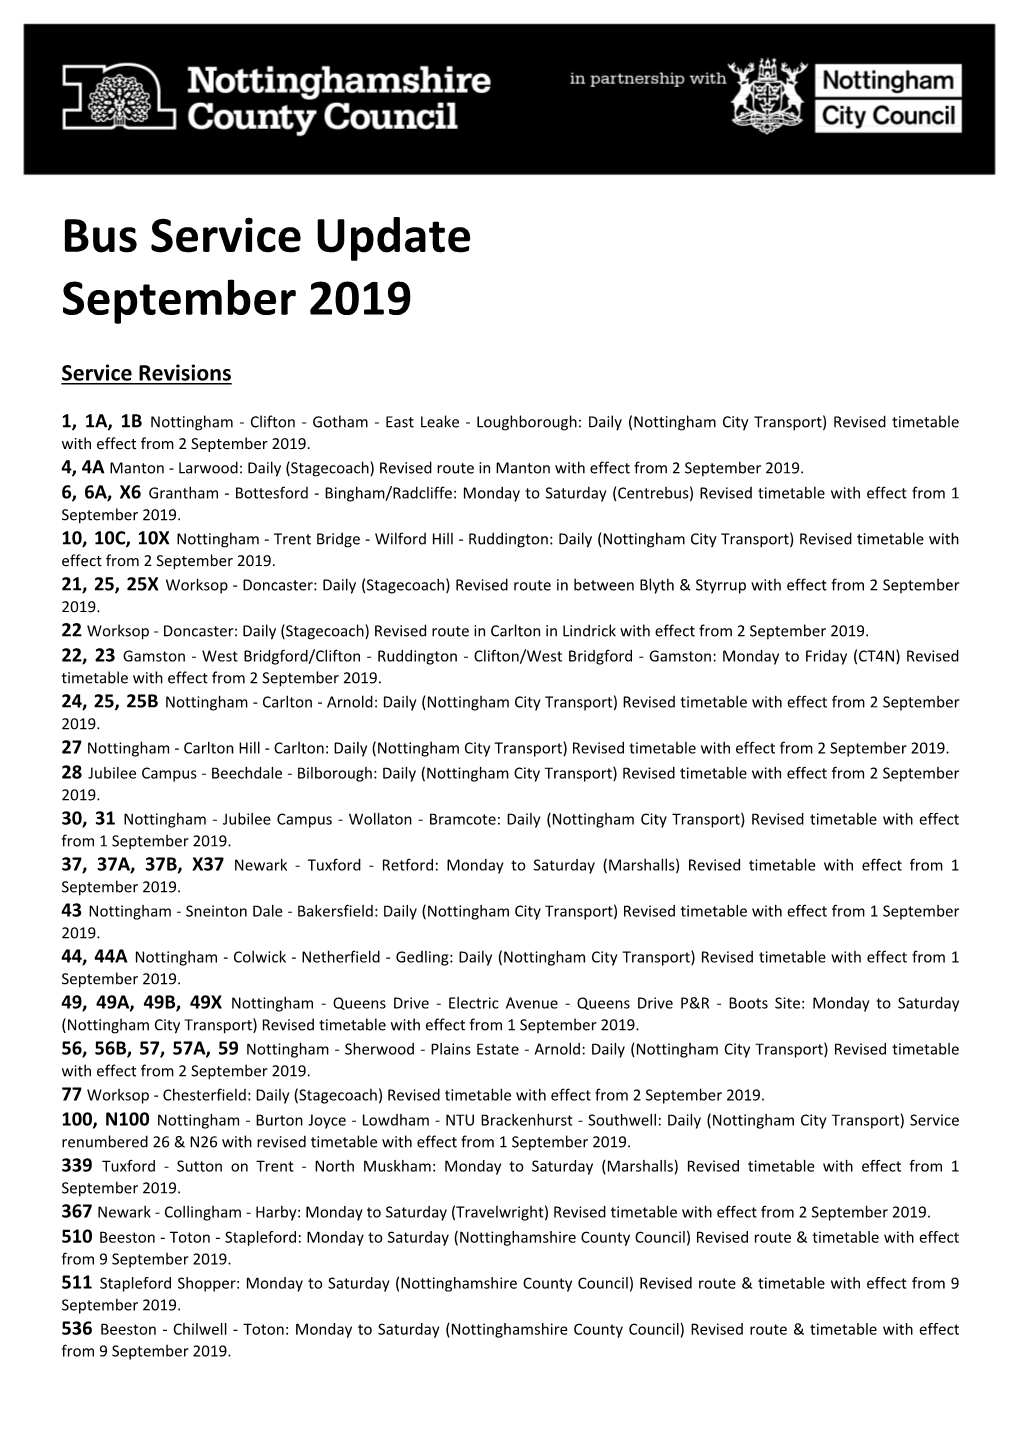 Bus Service Update September 2019